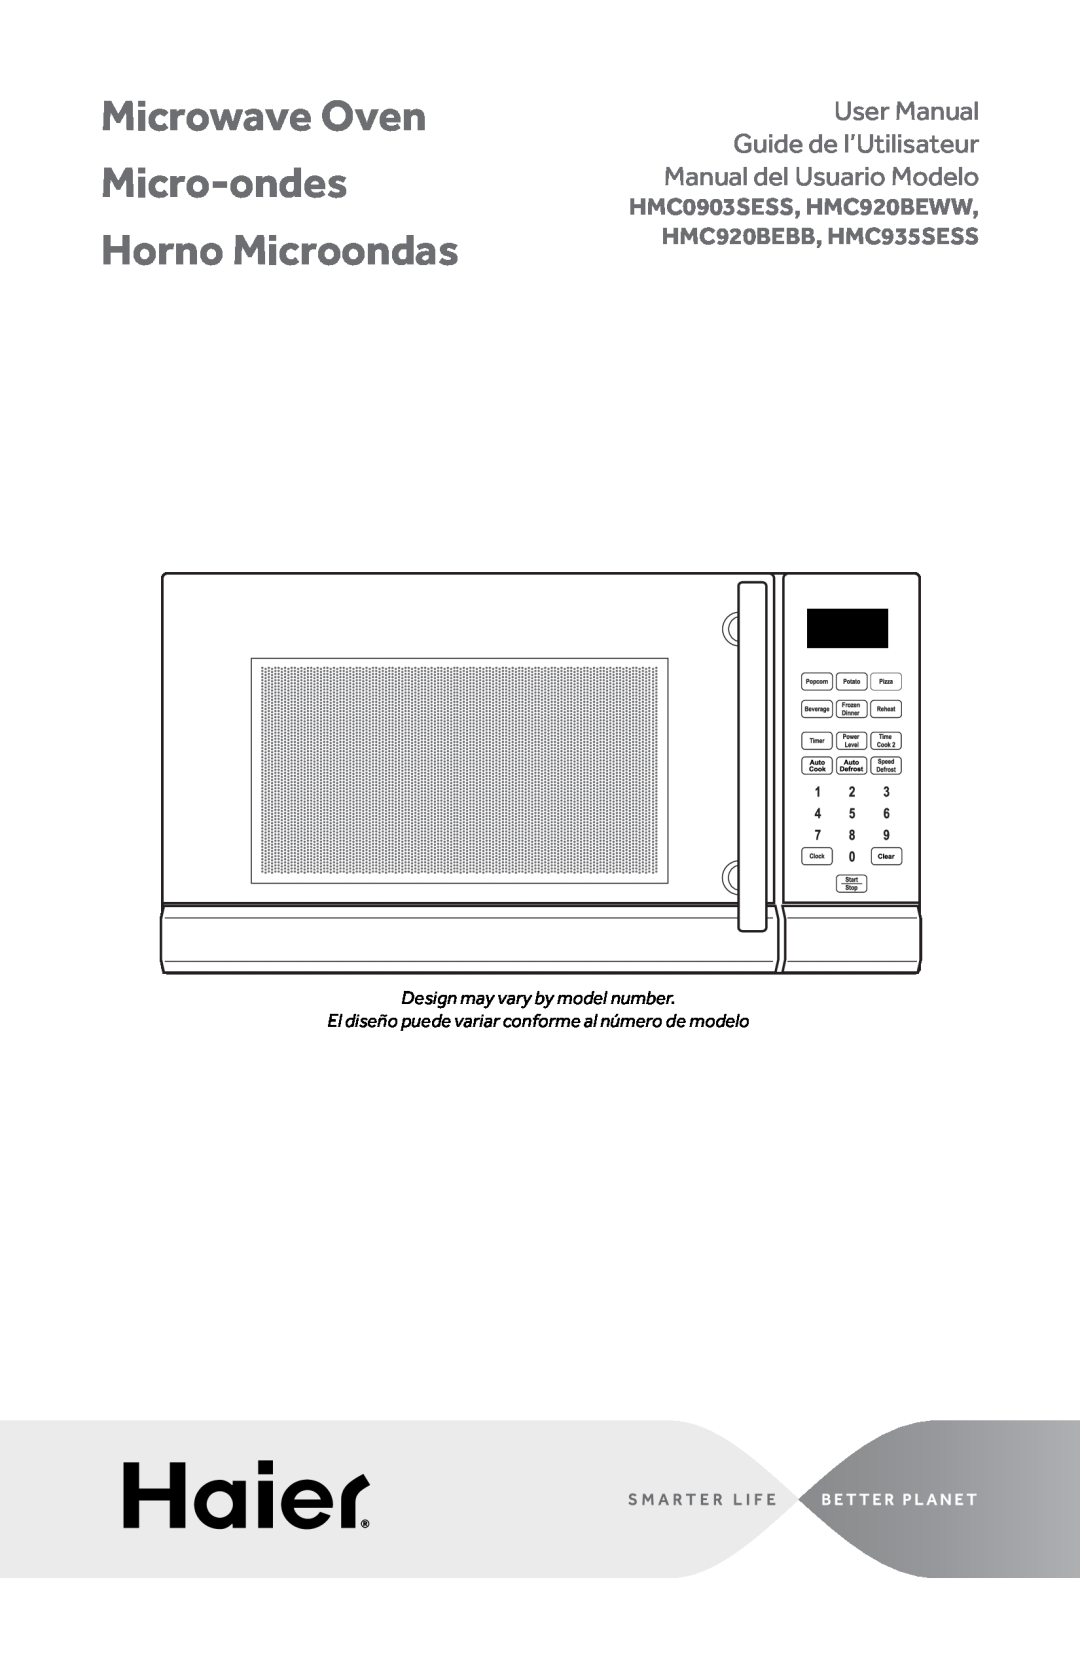 Haier user manual Microwave Oven Micro-ondes Horno Microondas, HMC0903SESS, HMC920BEWW, HMC920BEBB, HMC935SESS 